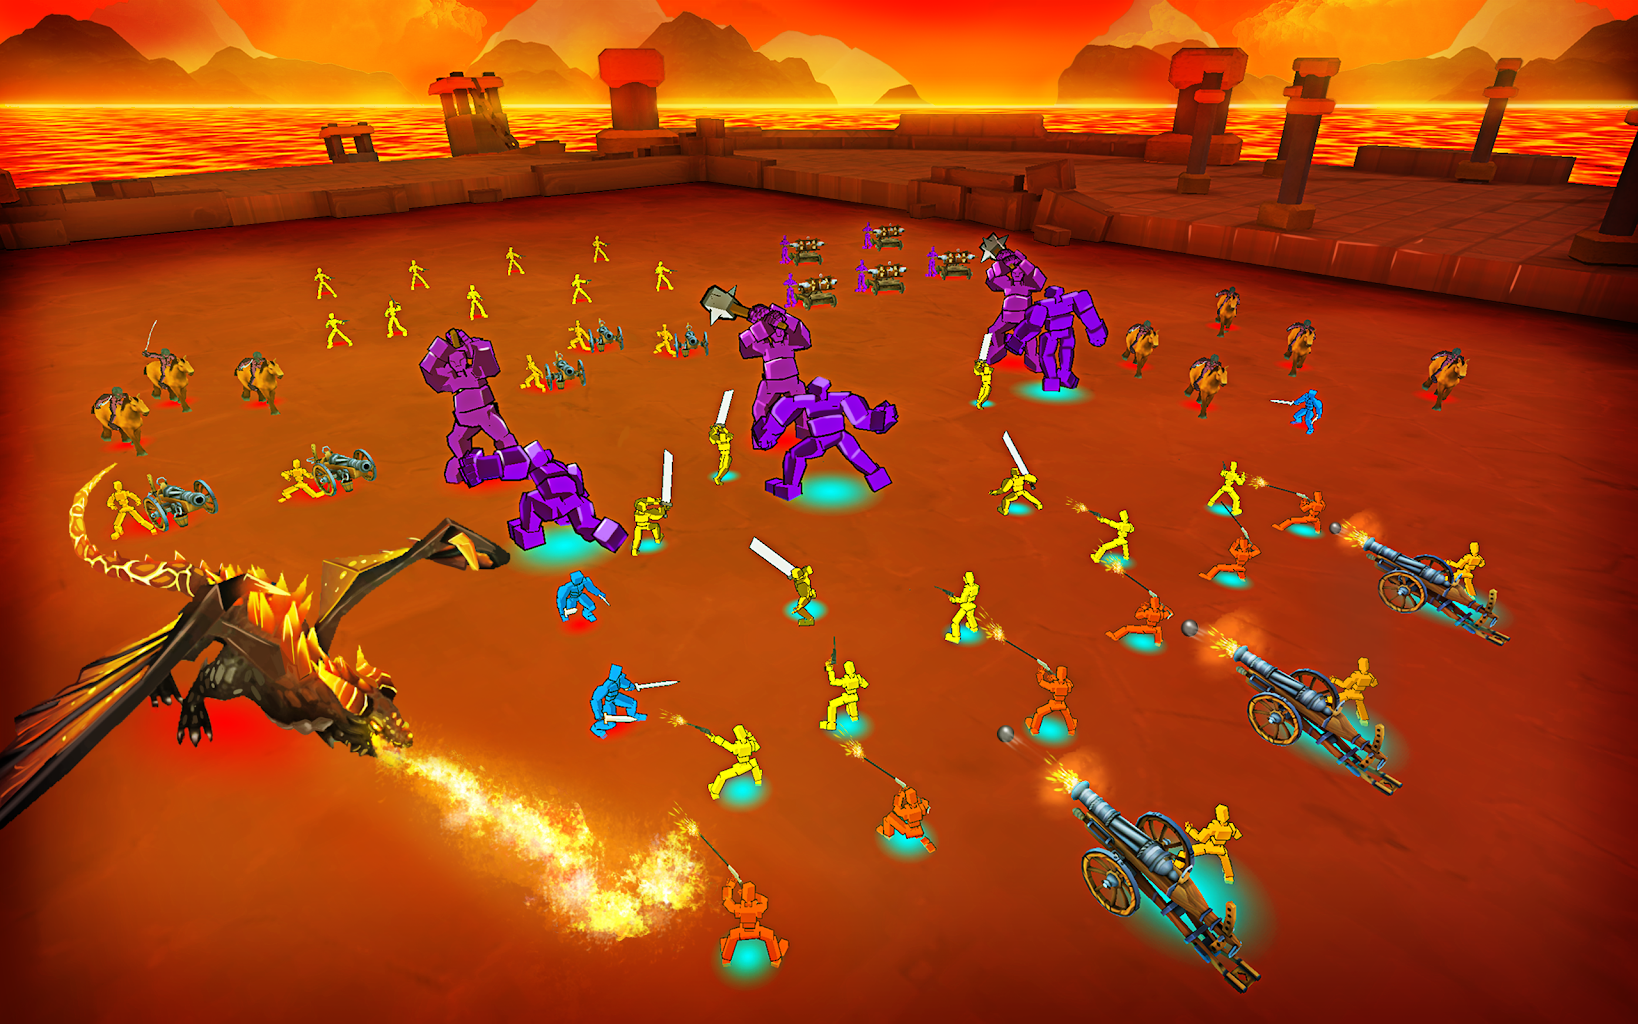 ultimate epic battle simulator free download pc